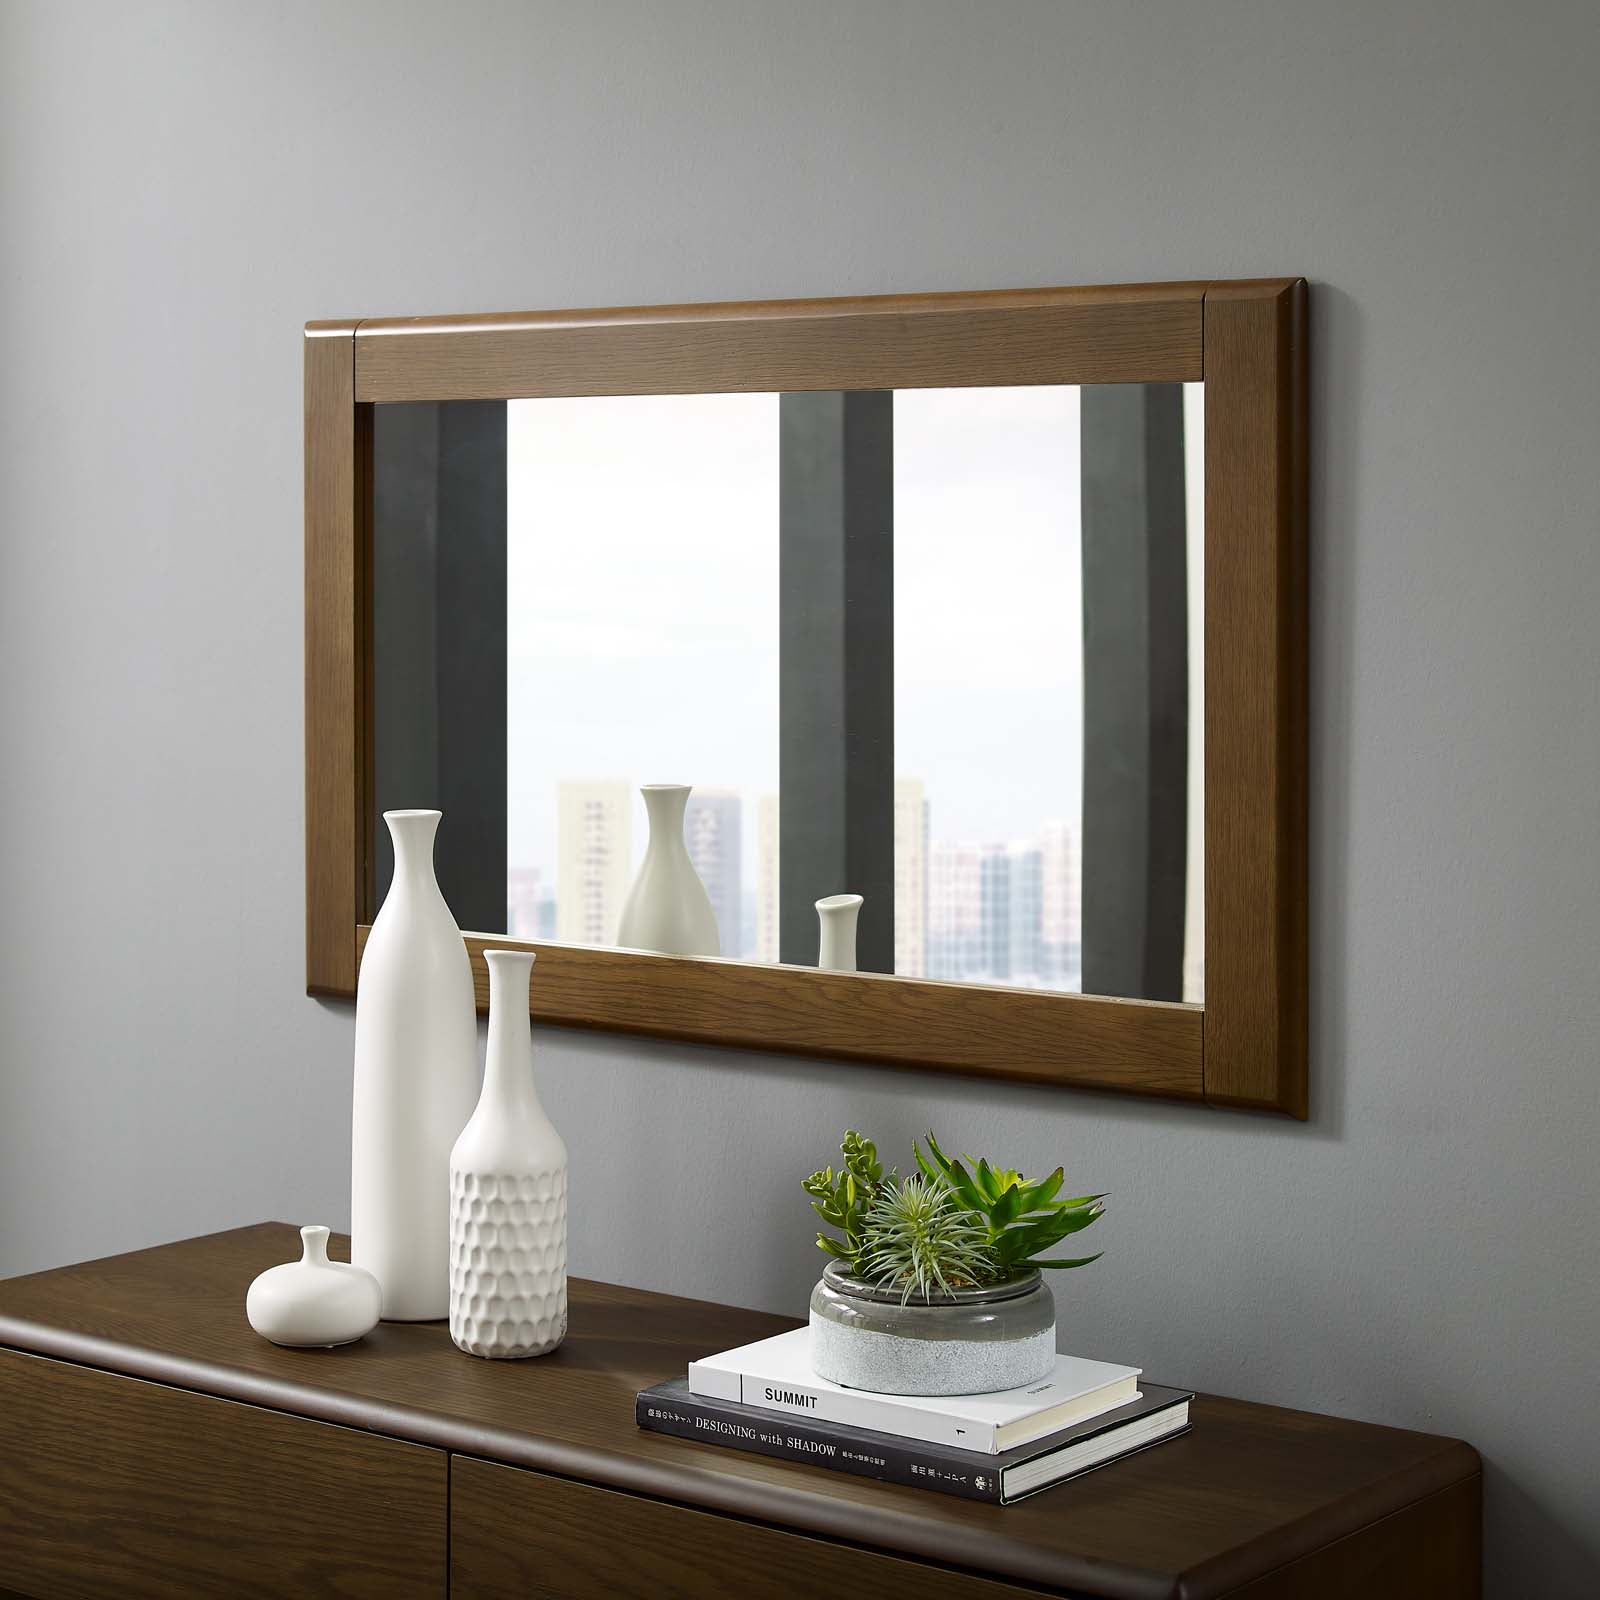 Talwyn Wood Frame Mirror - East Shore Modern Home Furnishings